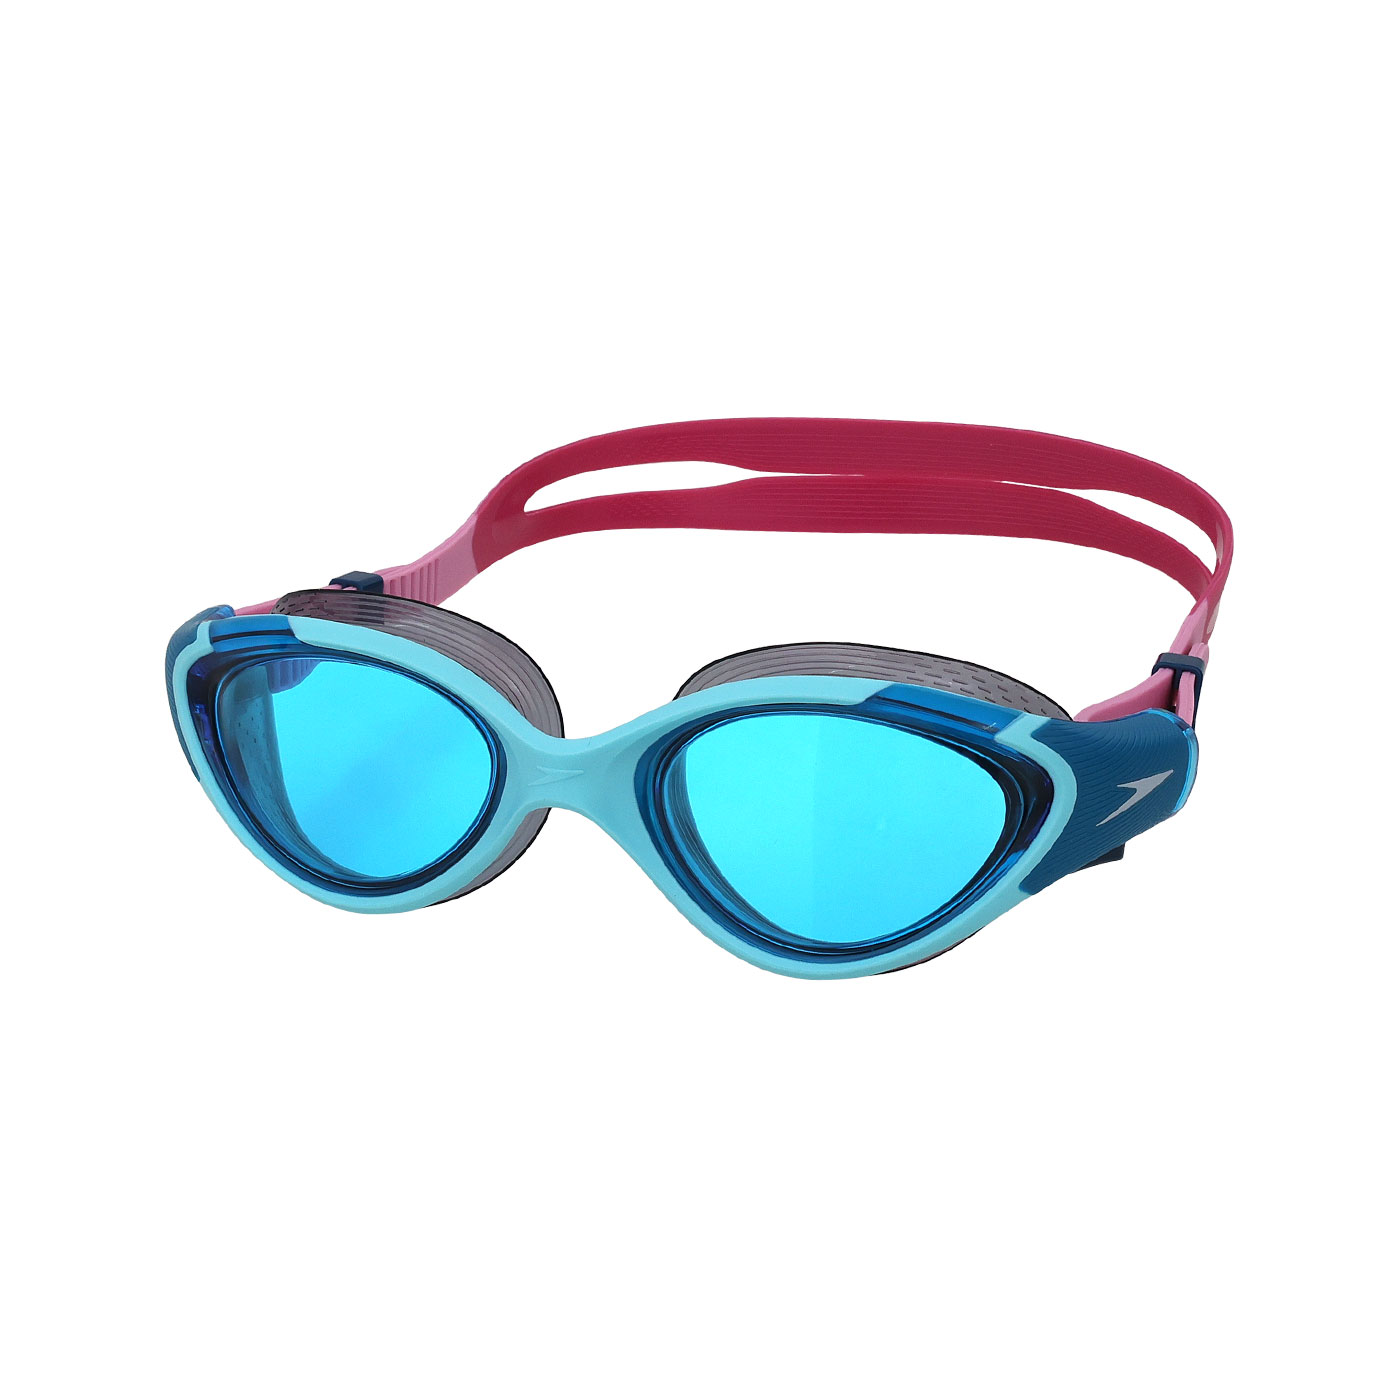 SPEEDO 女性運動泳鏡Biofuse2.0  SD800377616736 - 水藍深湖藍